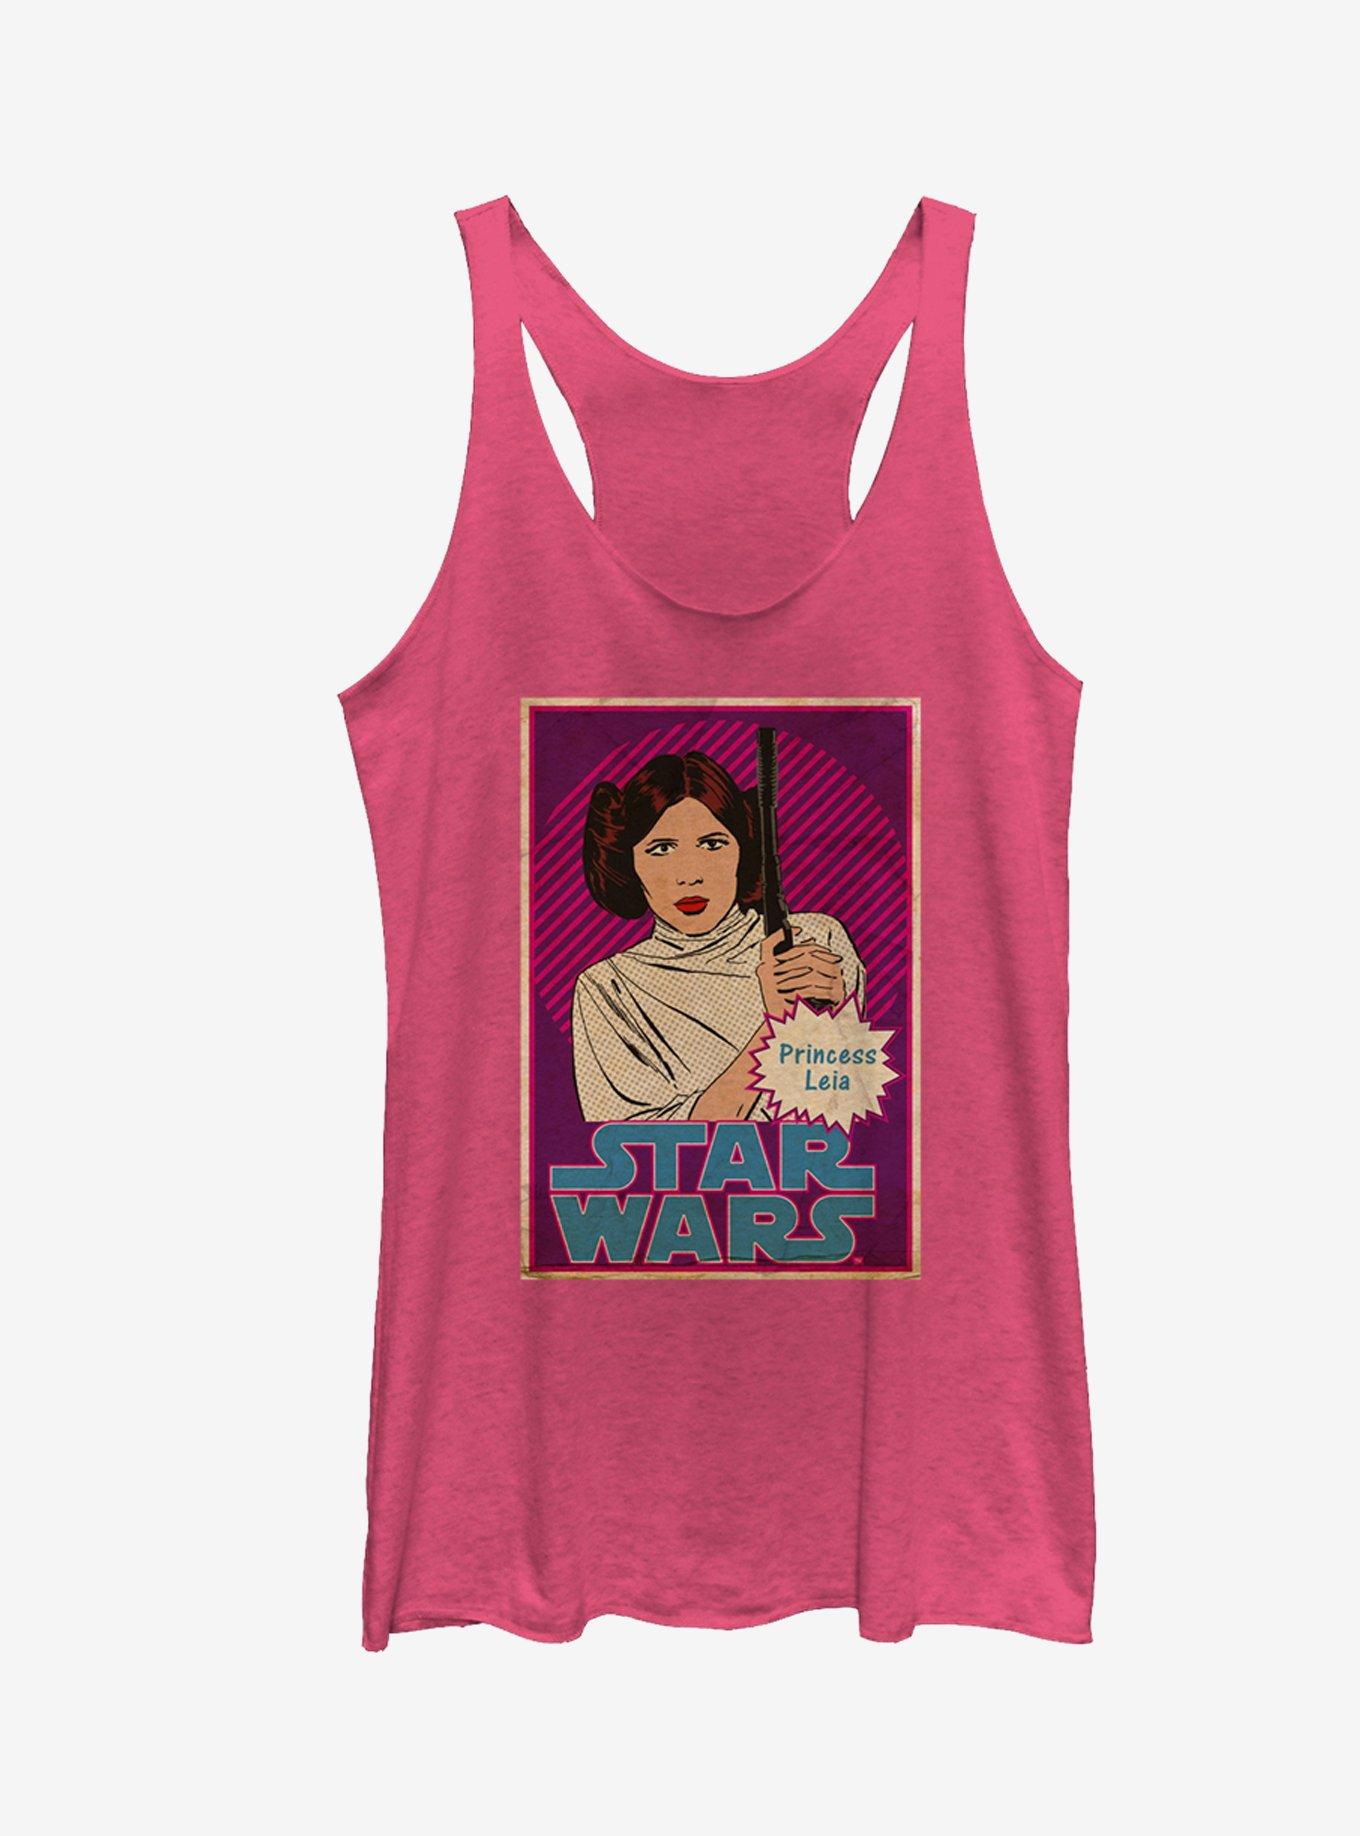 Star Wars Princess Leia Trading Card Girls Tanks